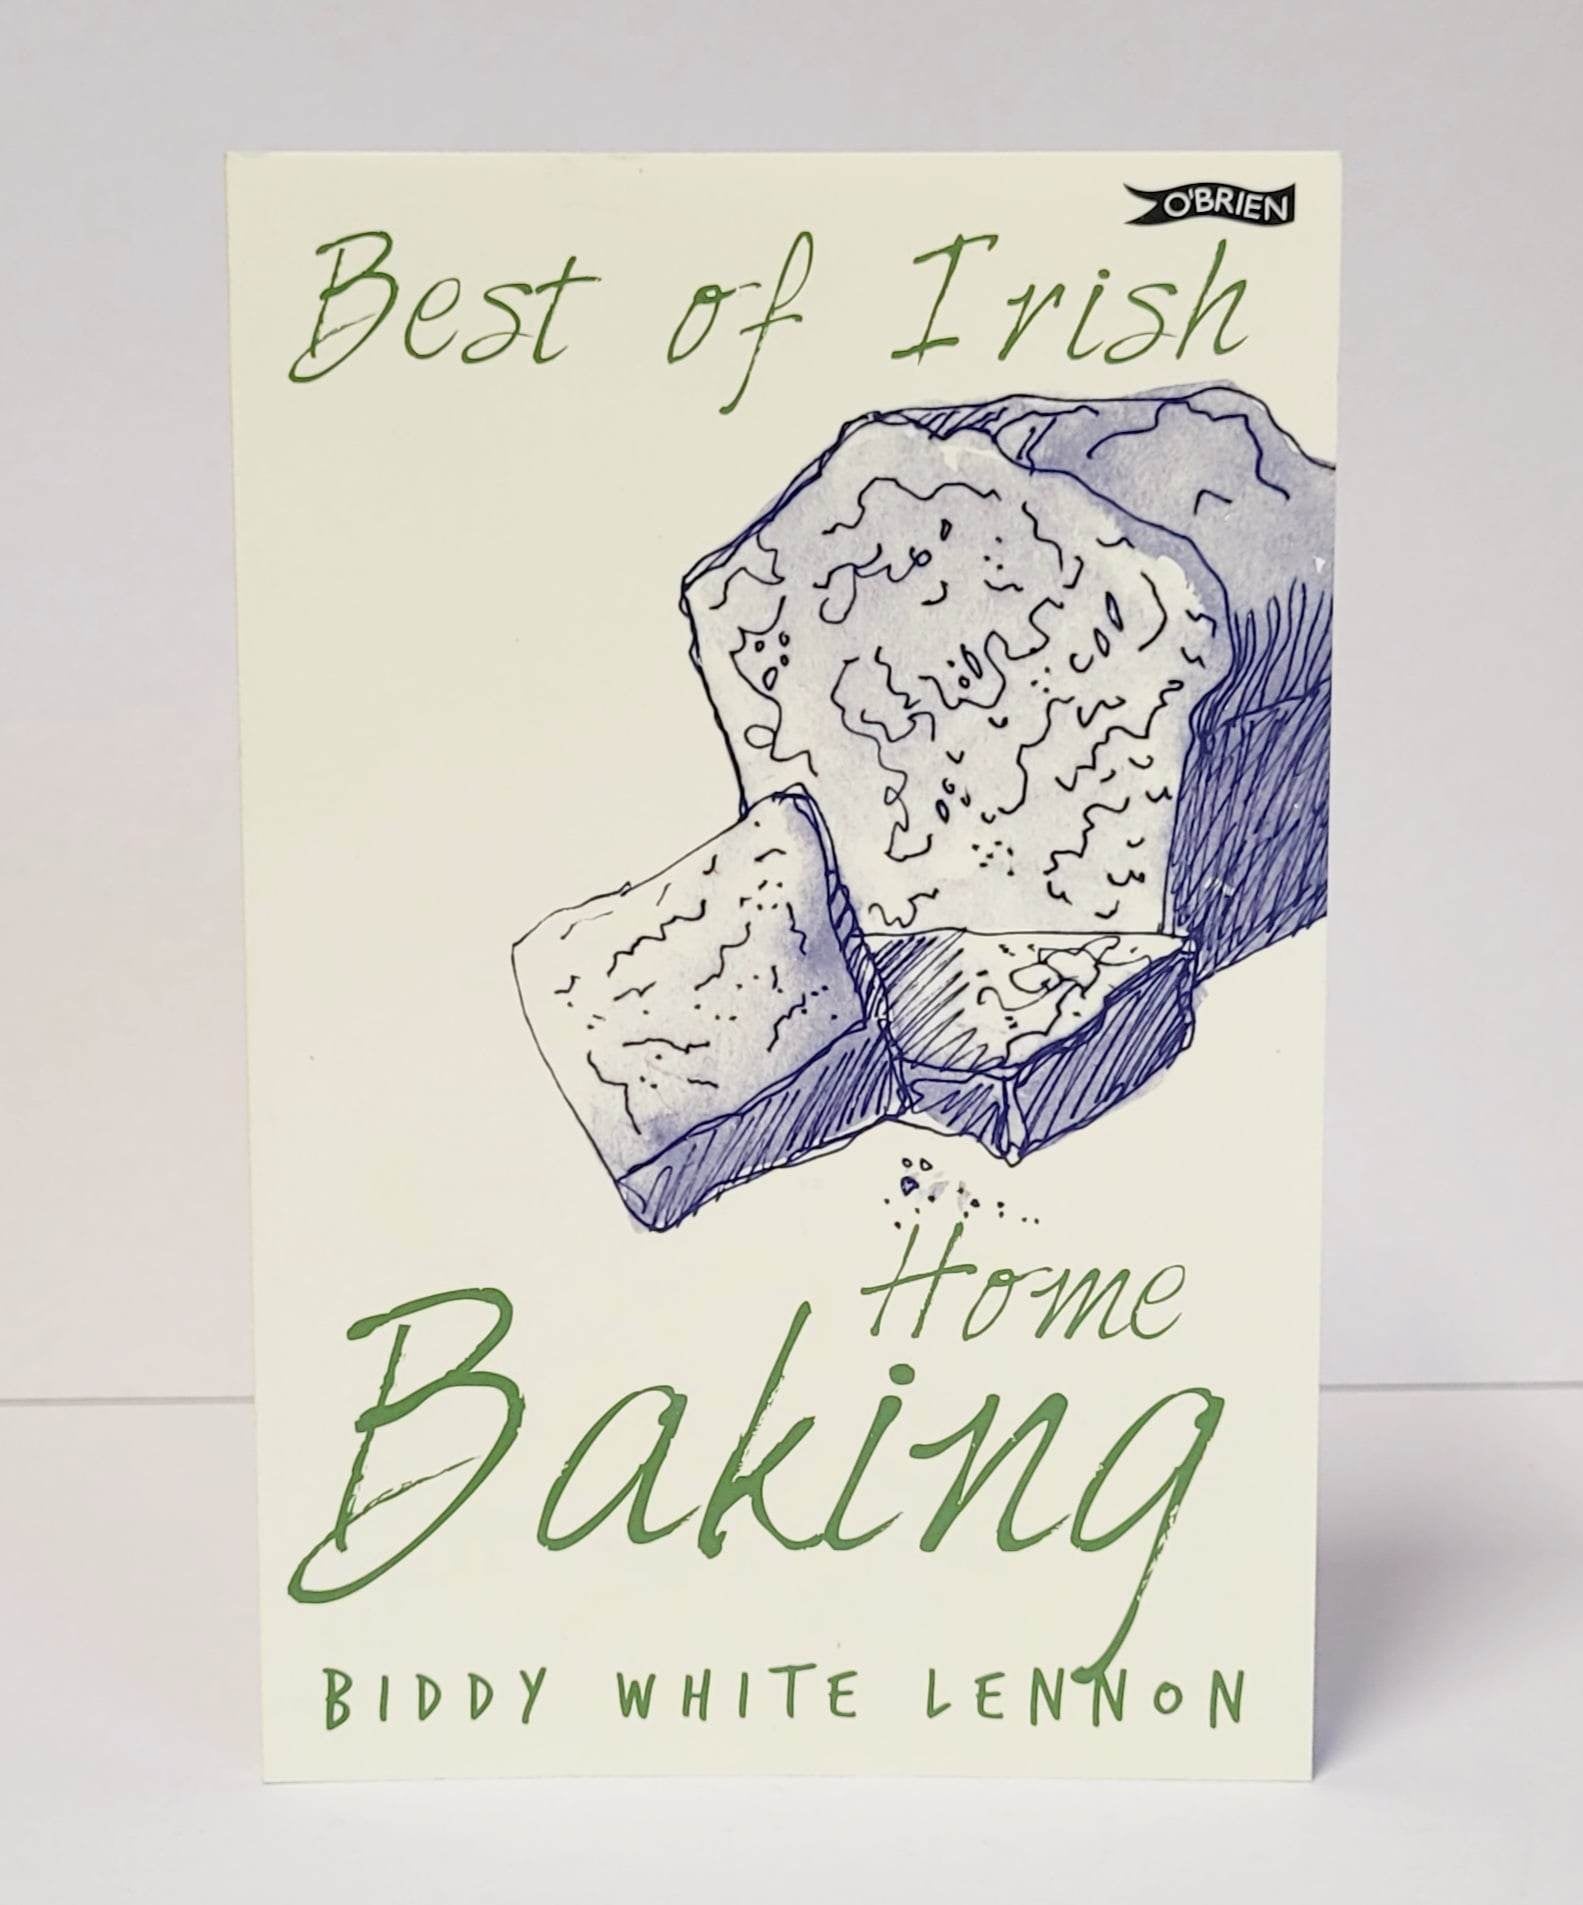 Best of Irish Home Baking by Biddy White Lennon